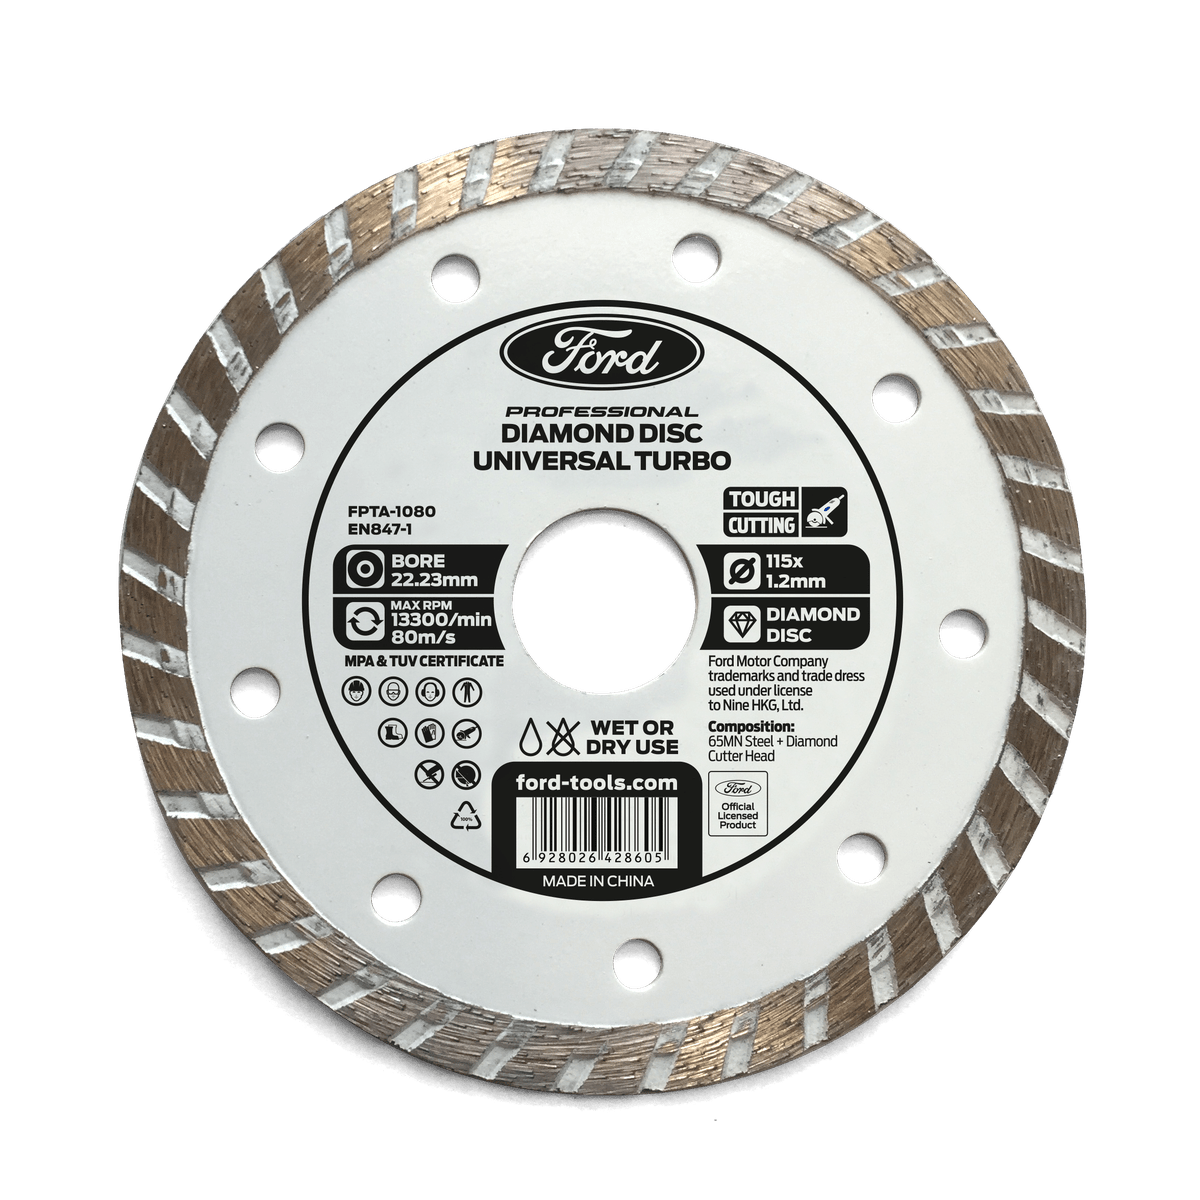 Ford Diamond Universal Turbo Disc 115×1.2mm - FPTA-1080 | Supply Master | Accra, Ghana Tools Building Steel Engineering Hardware tool